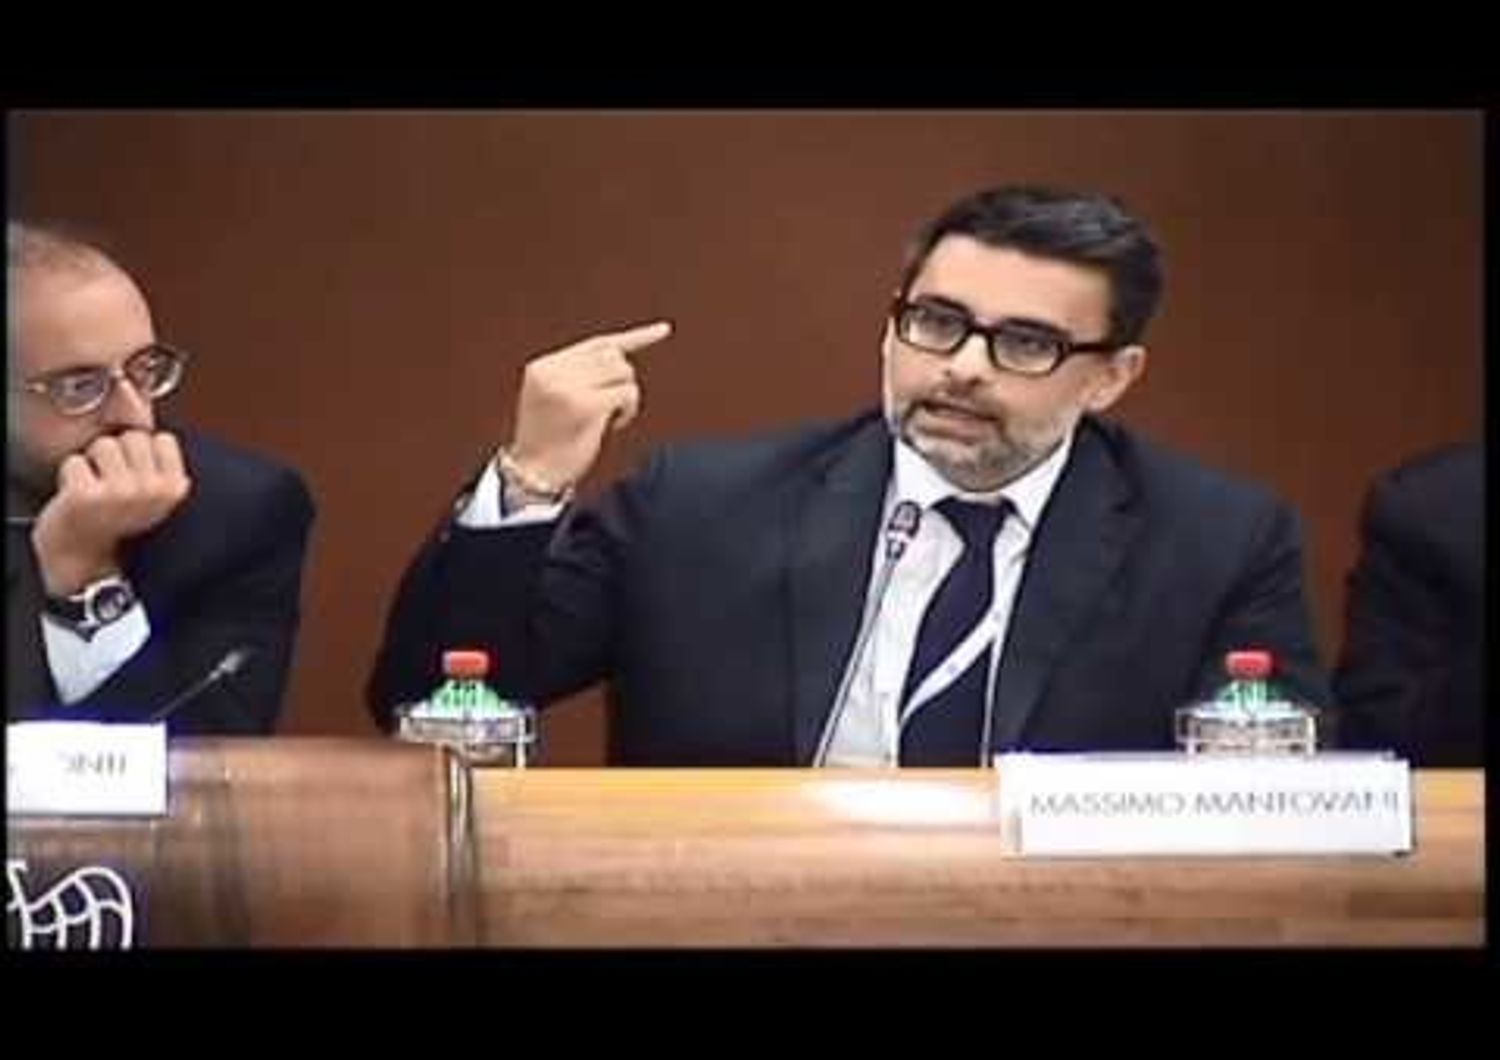 Anigas: Massimo Mantovani eletto nuovo presidente